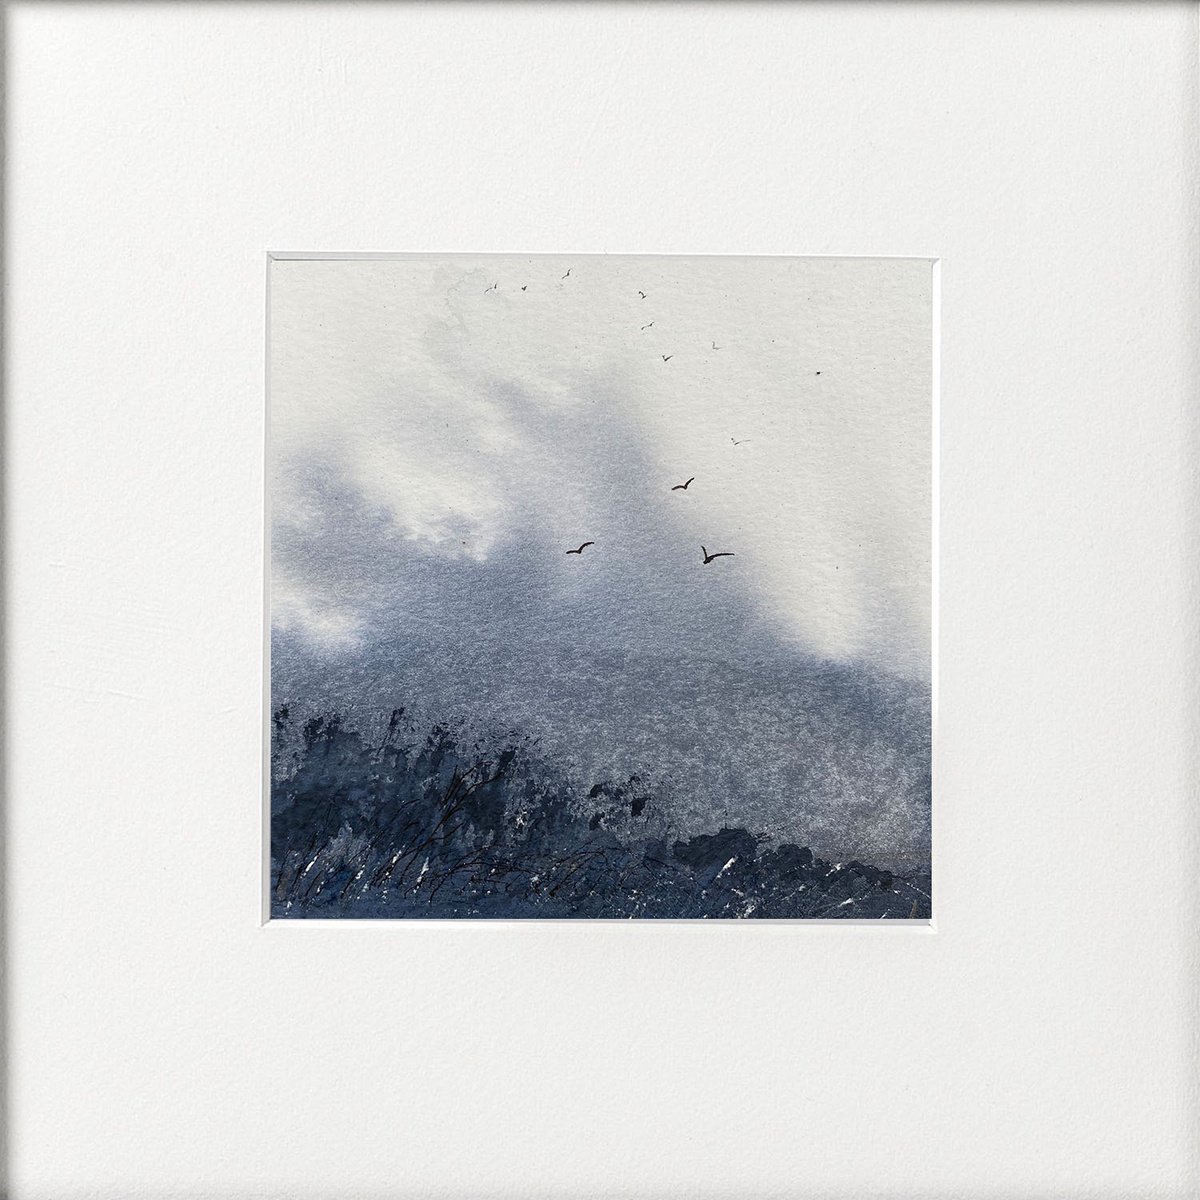 Monochrome - Misty Landscape with birds by Teresa Tanner